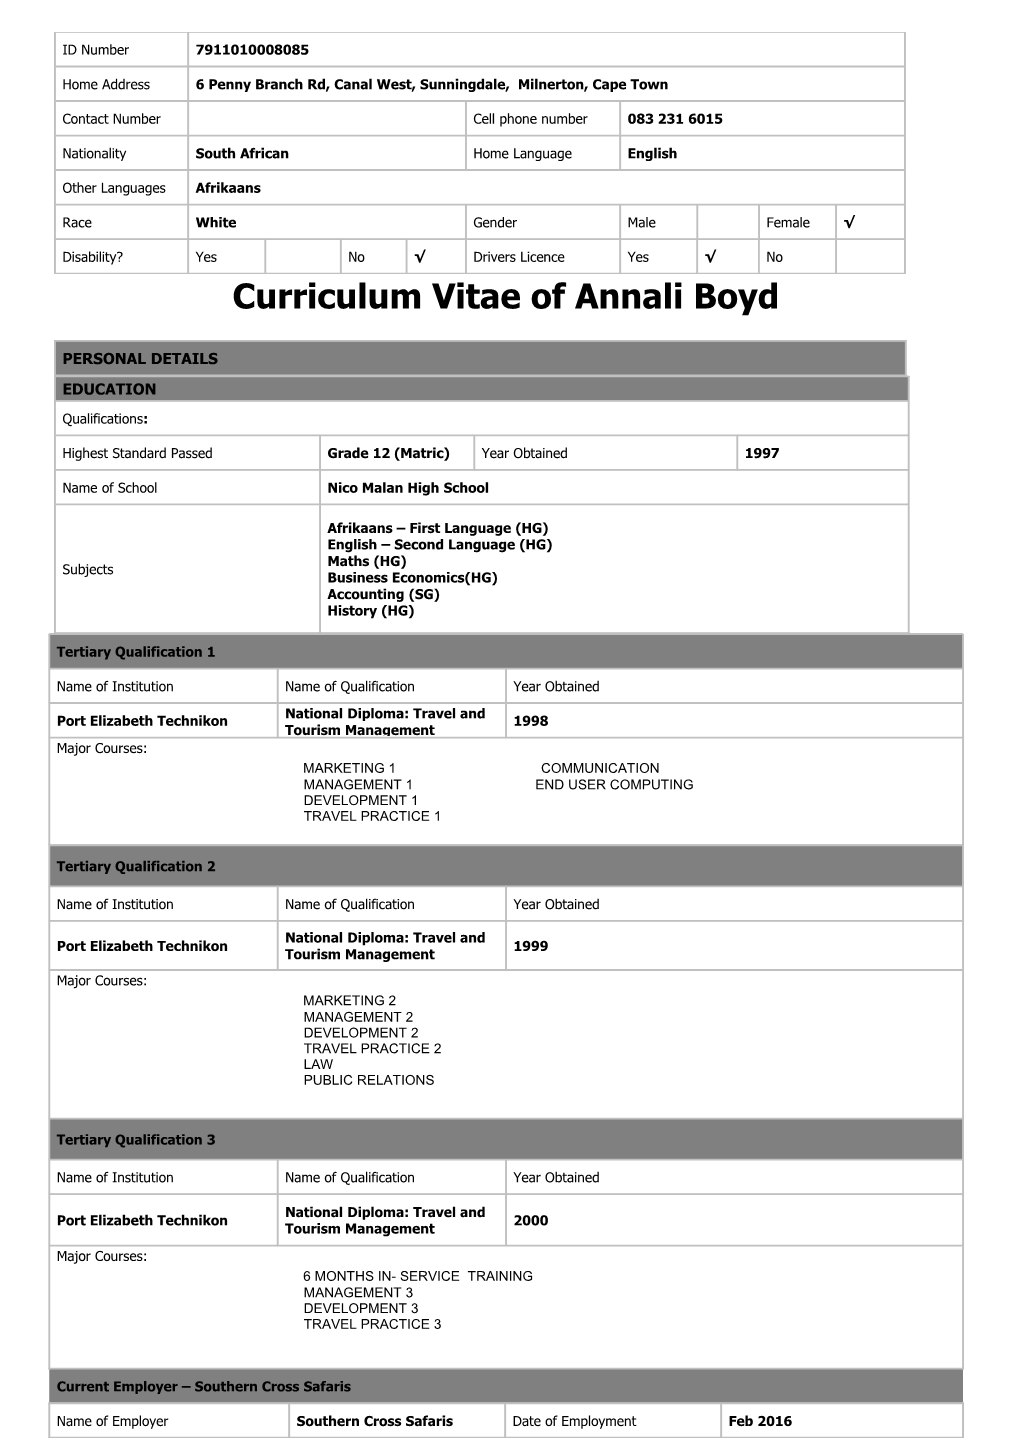 Curriculum Vitae of Annali Boyd